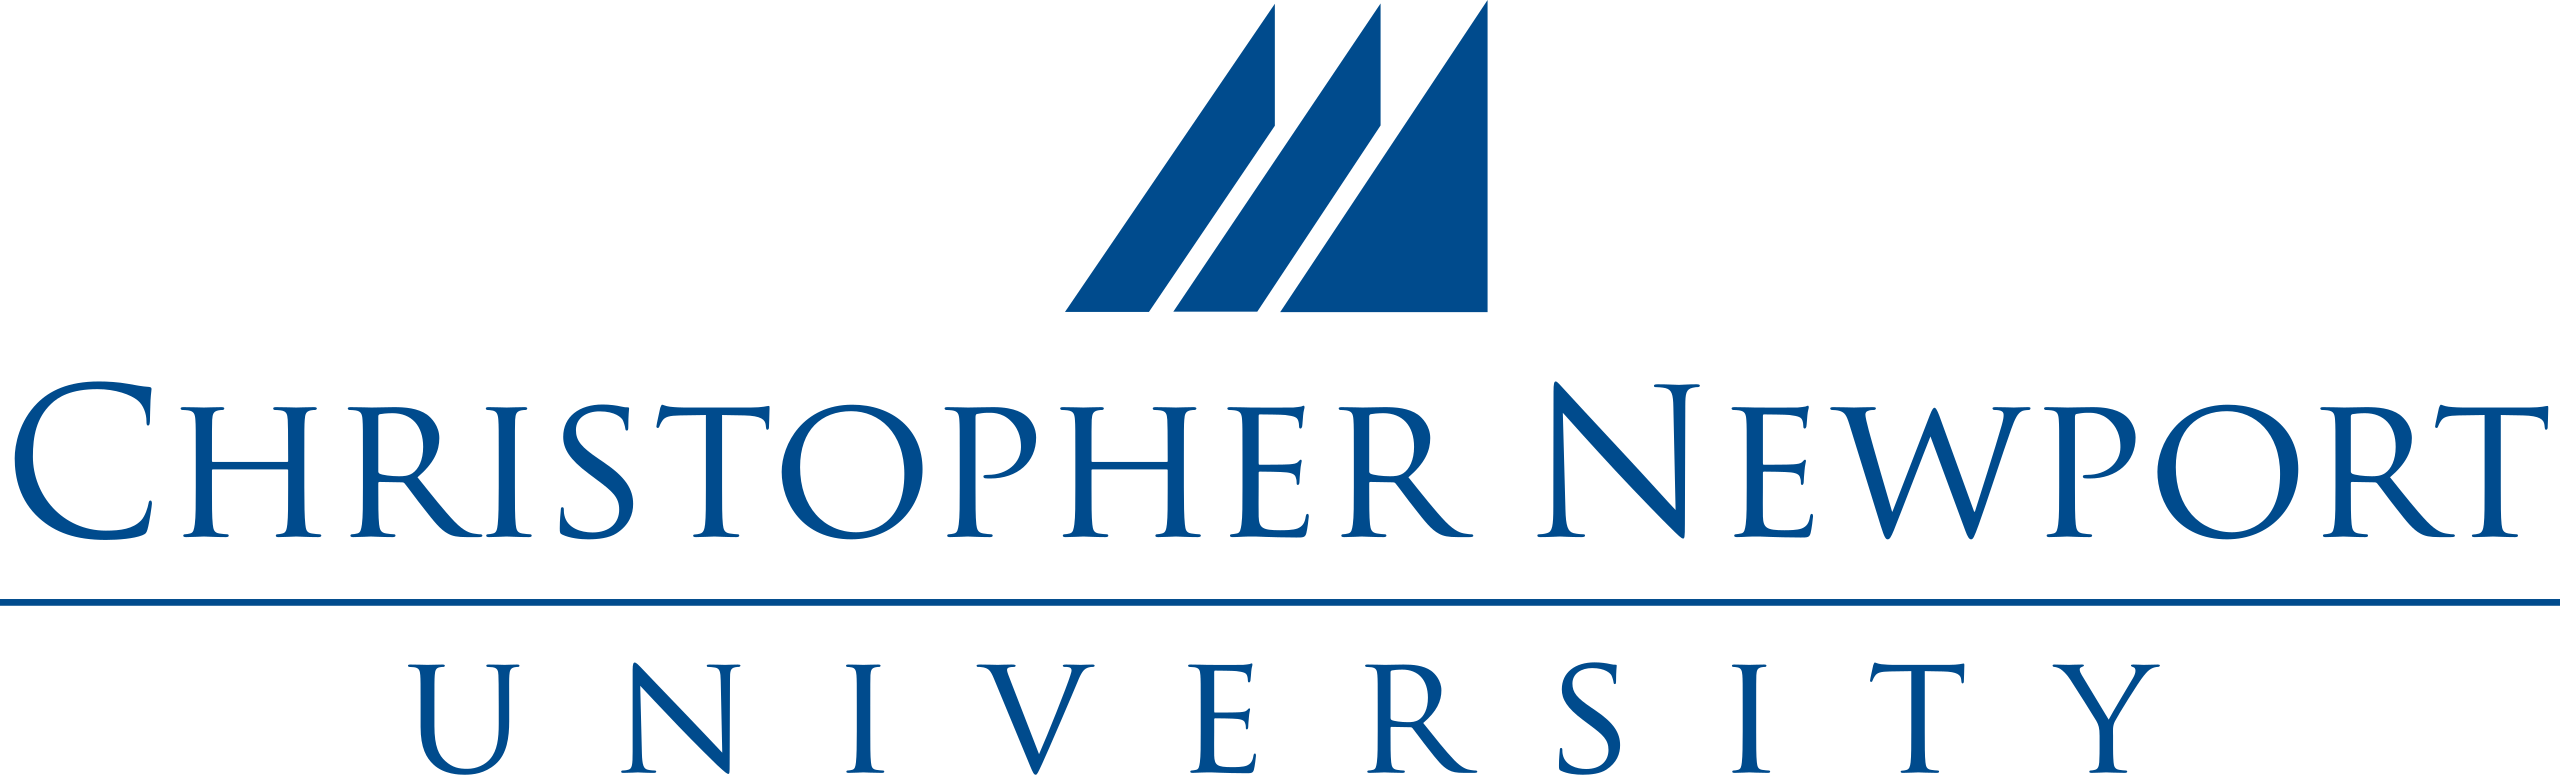 Christopher_Newport_University_(logo).svg